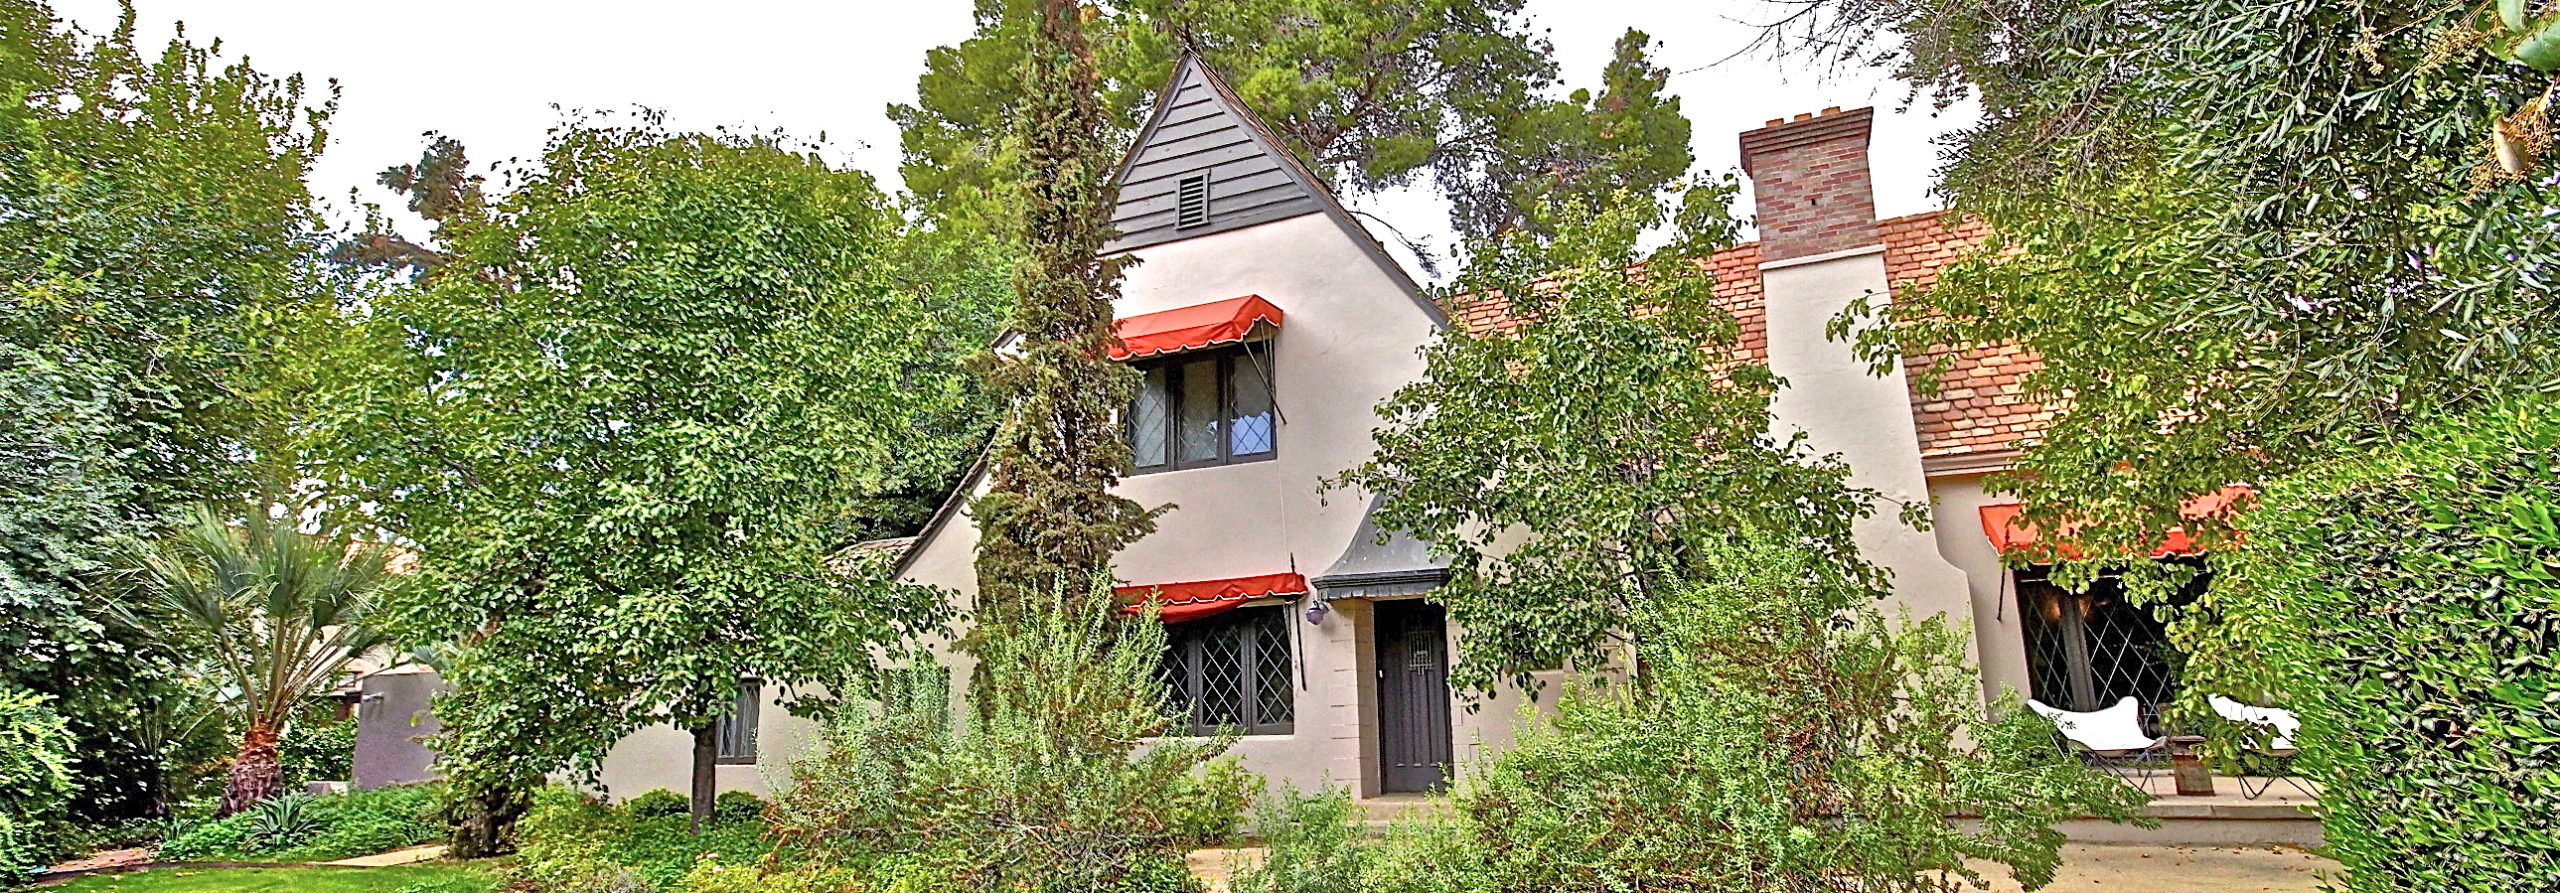 historic-homes-real-estate-for-sale-phoenix-arizona